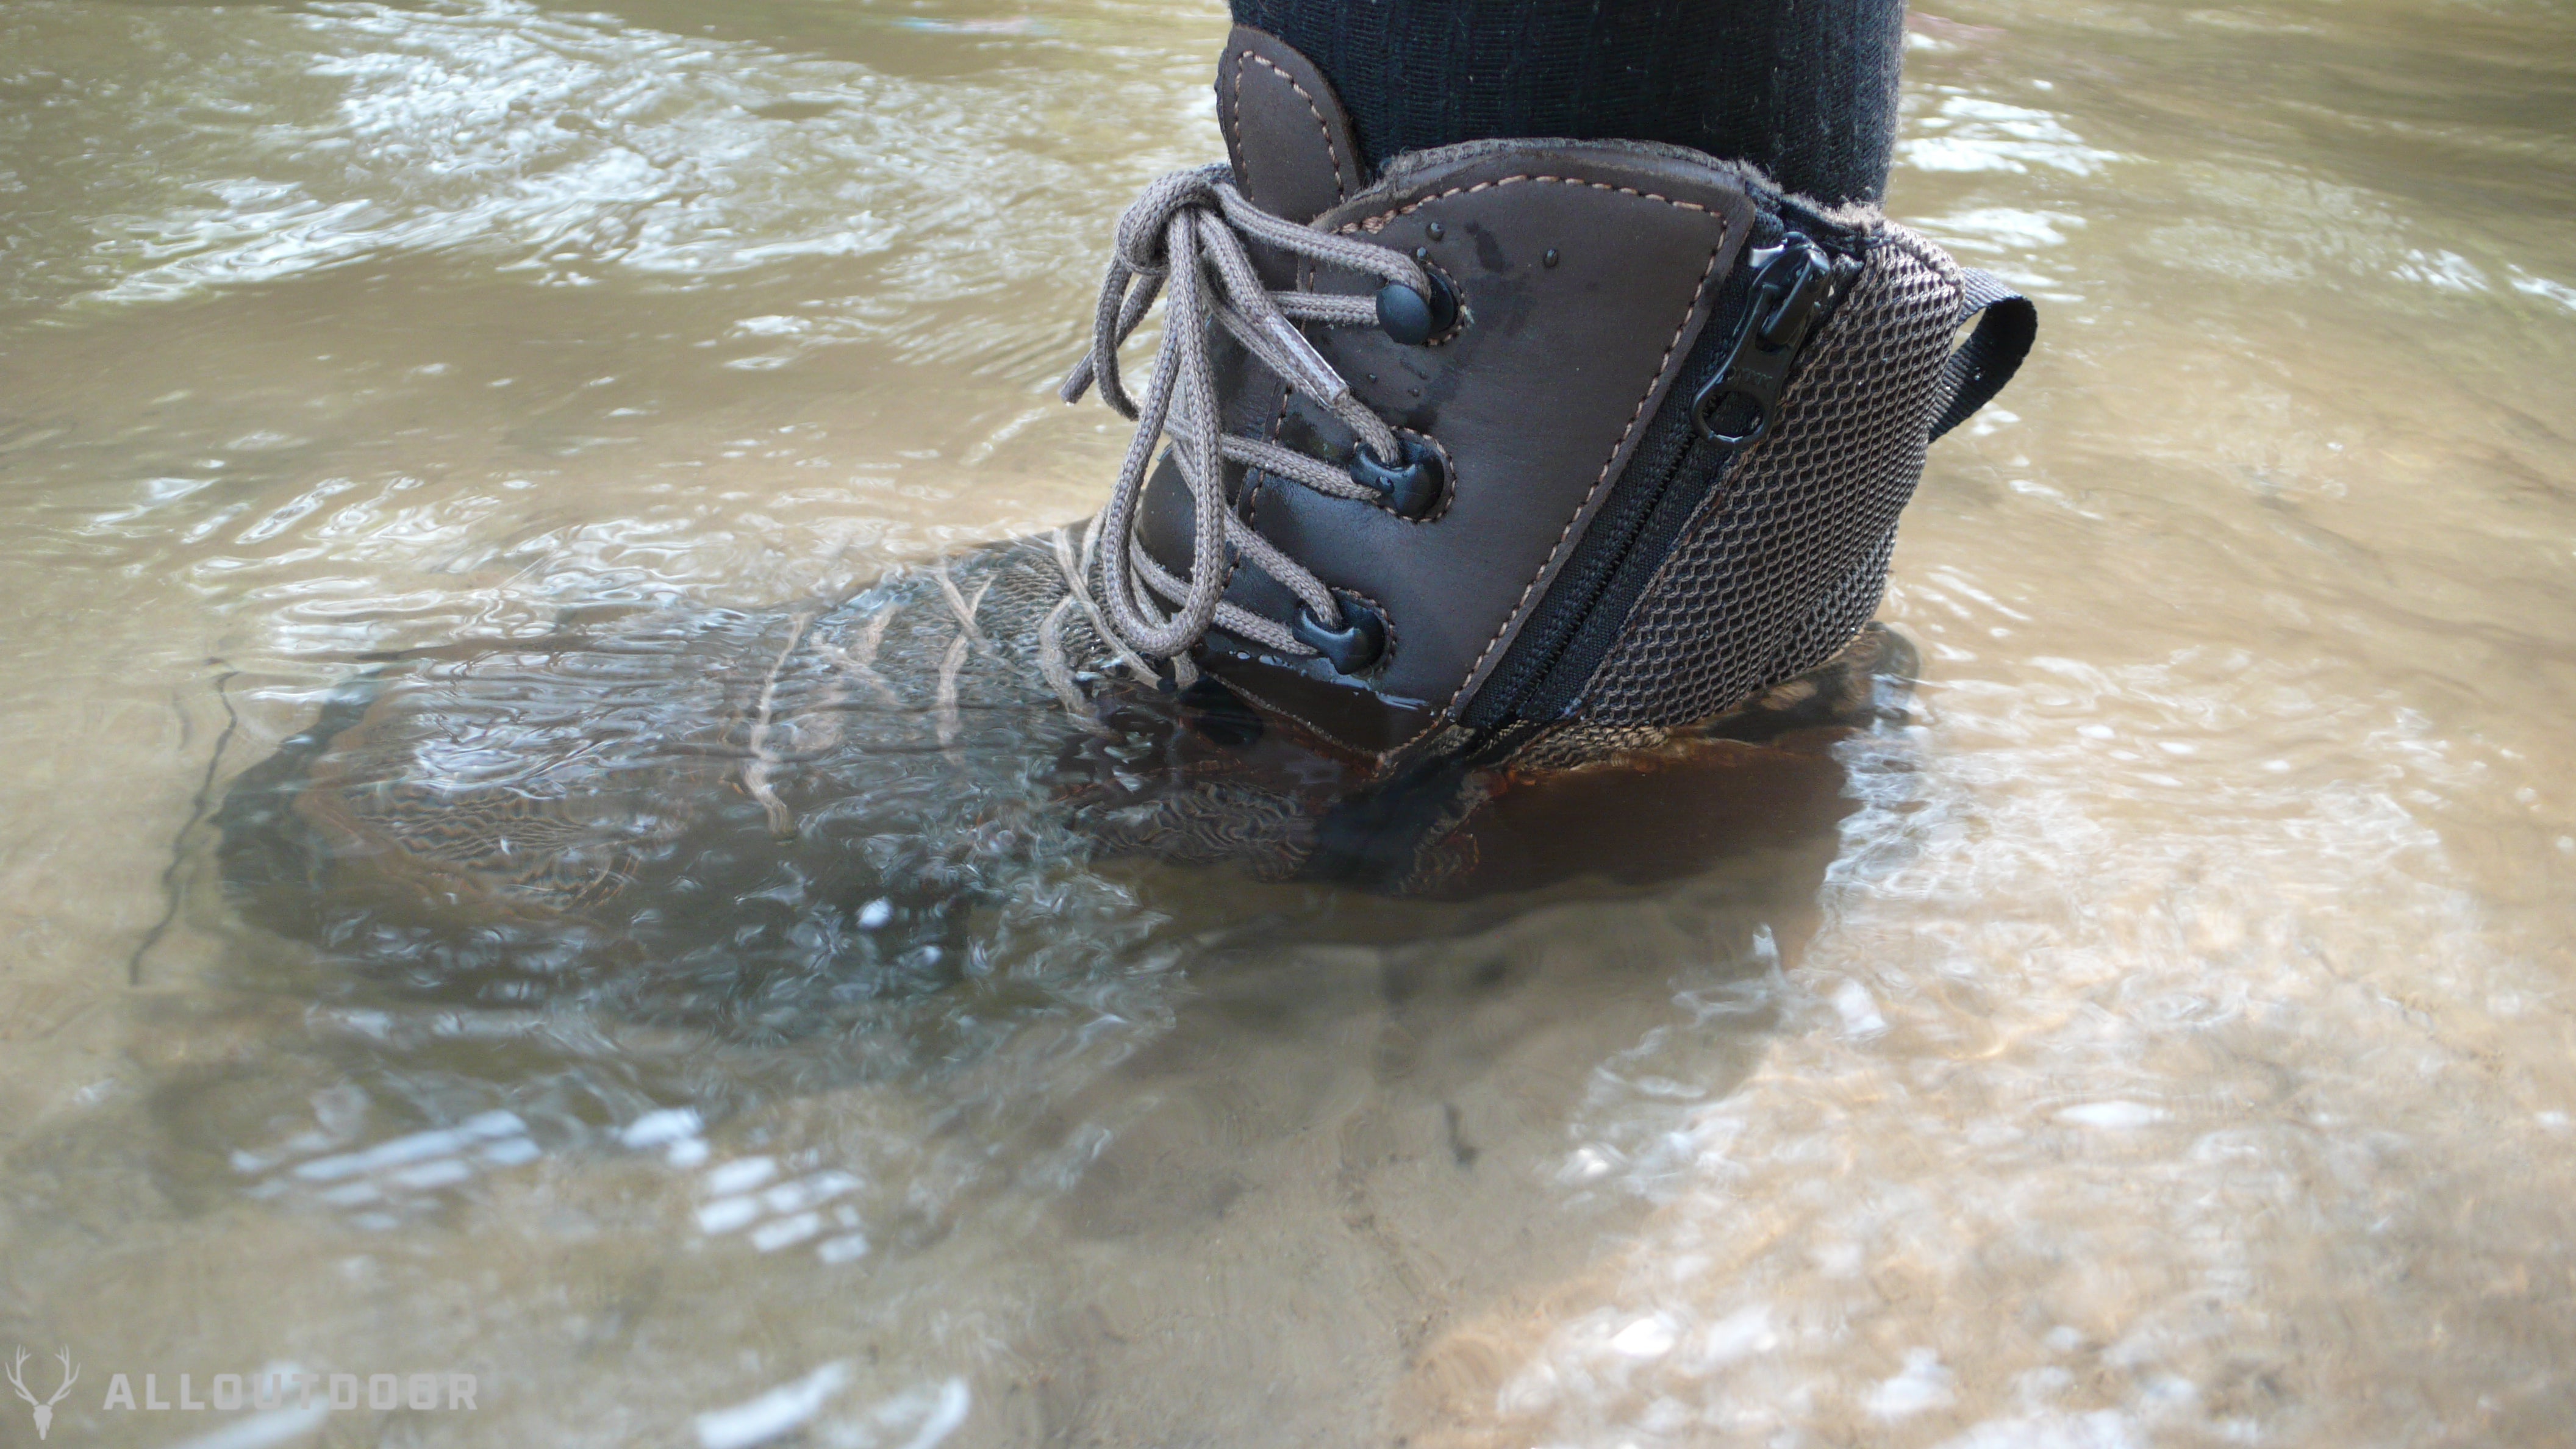 VaprTrek boots by Irish Setter